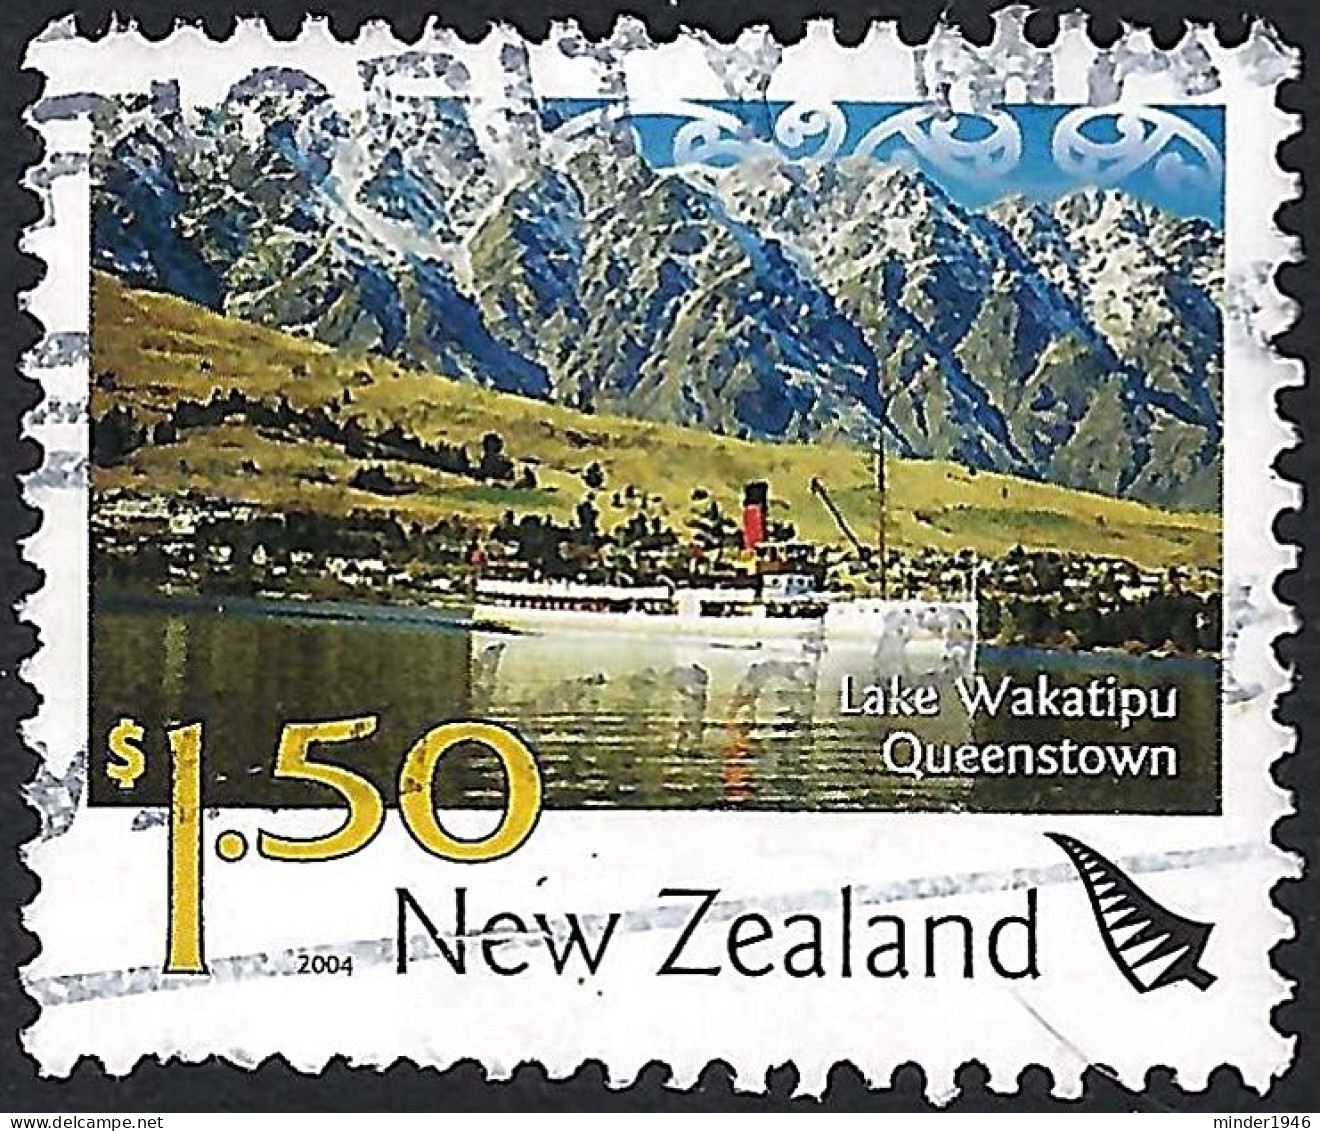 NEW ZEALAND 2004 QEII $1.50 Multicoloured, Tourist Attractions-Lake Watatipu Queenstown Used - Gebraucht